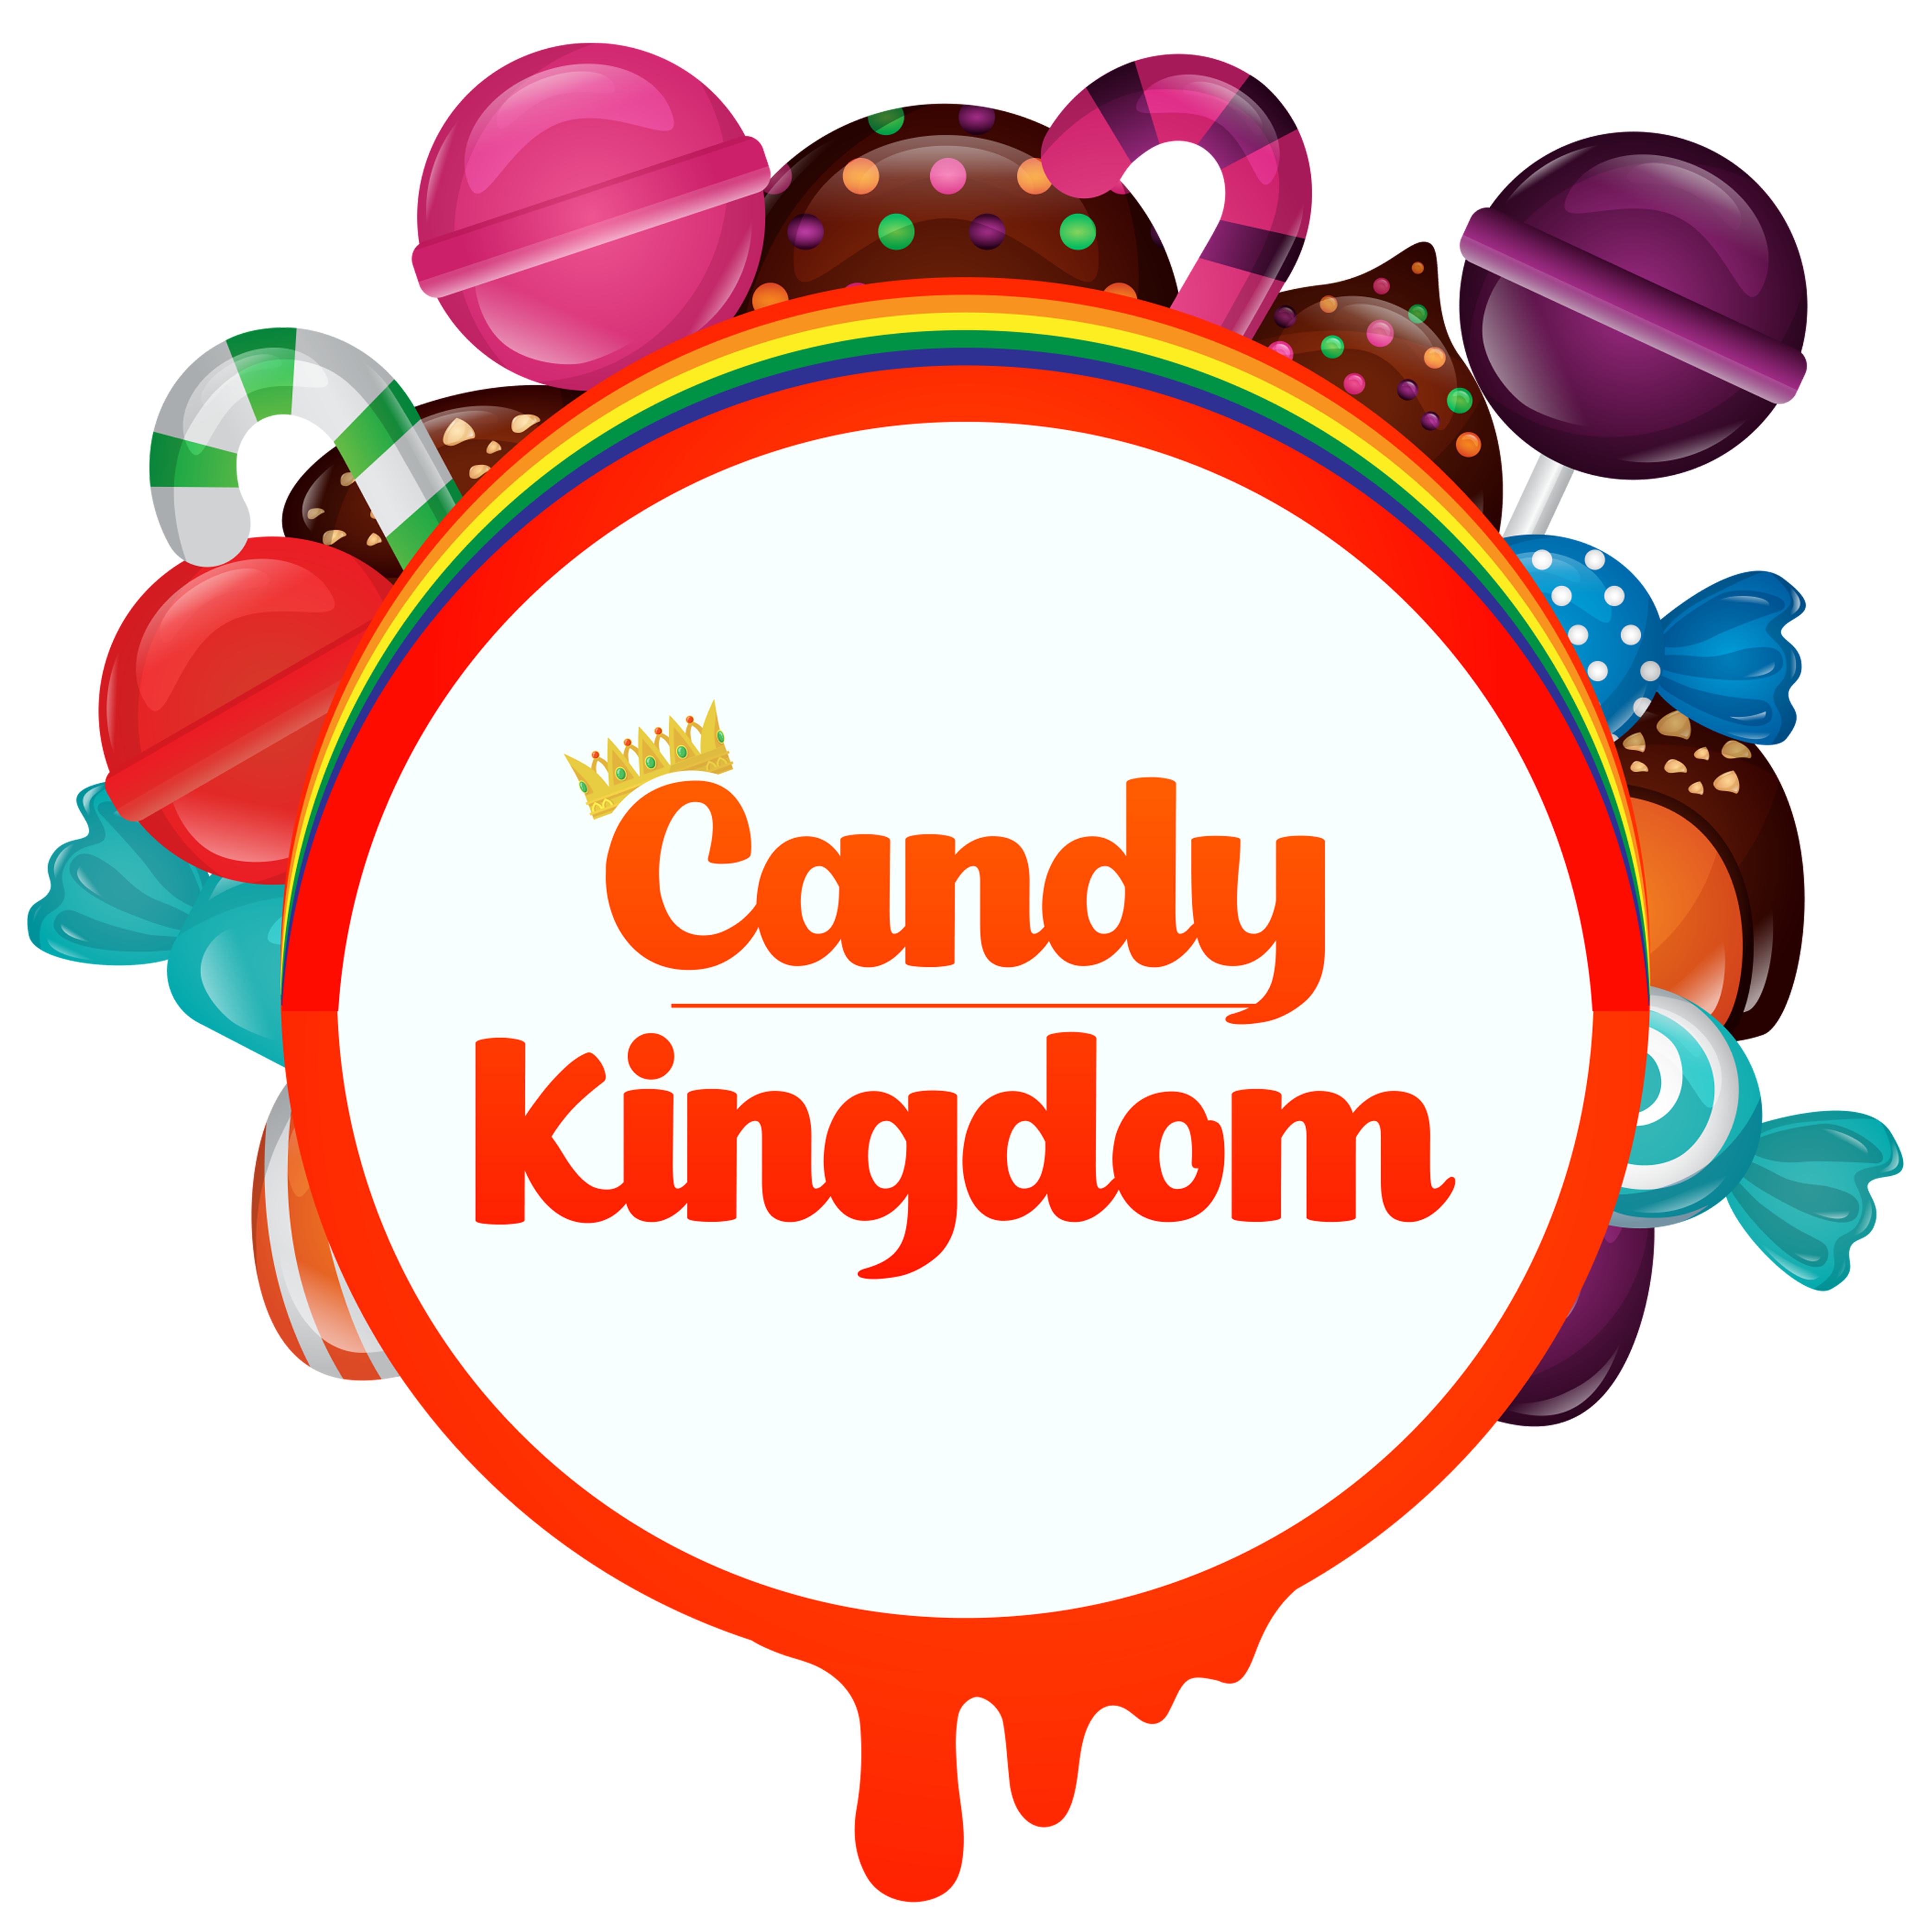 Candy kingdom